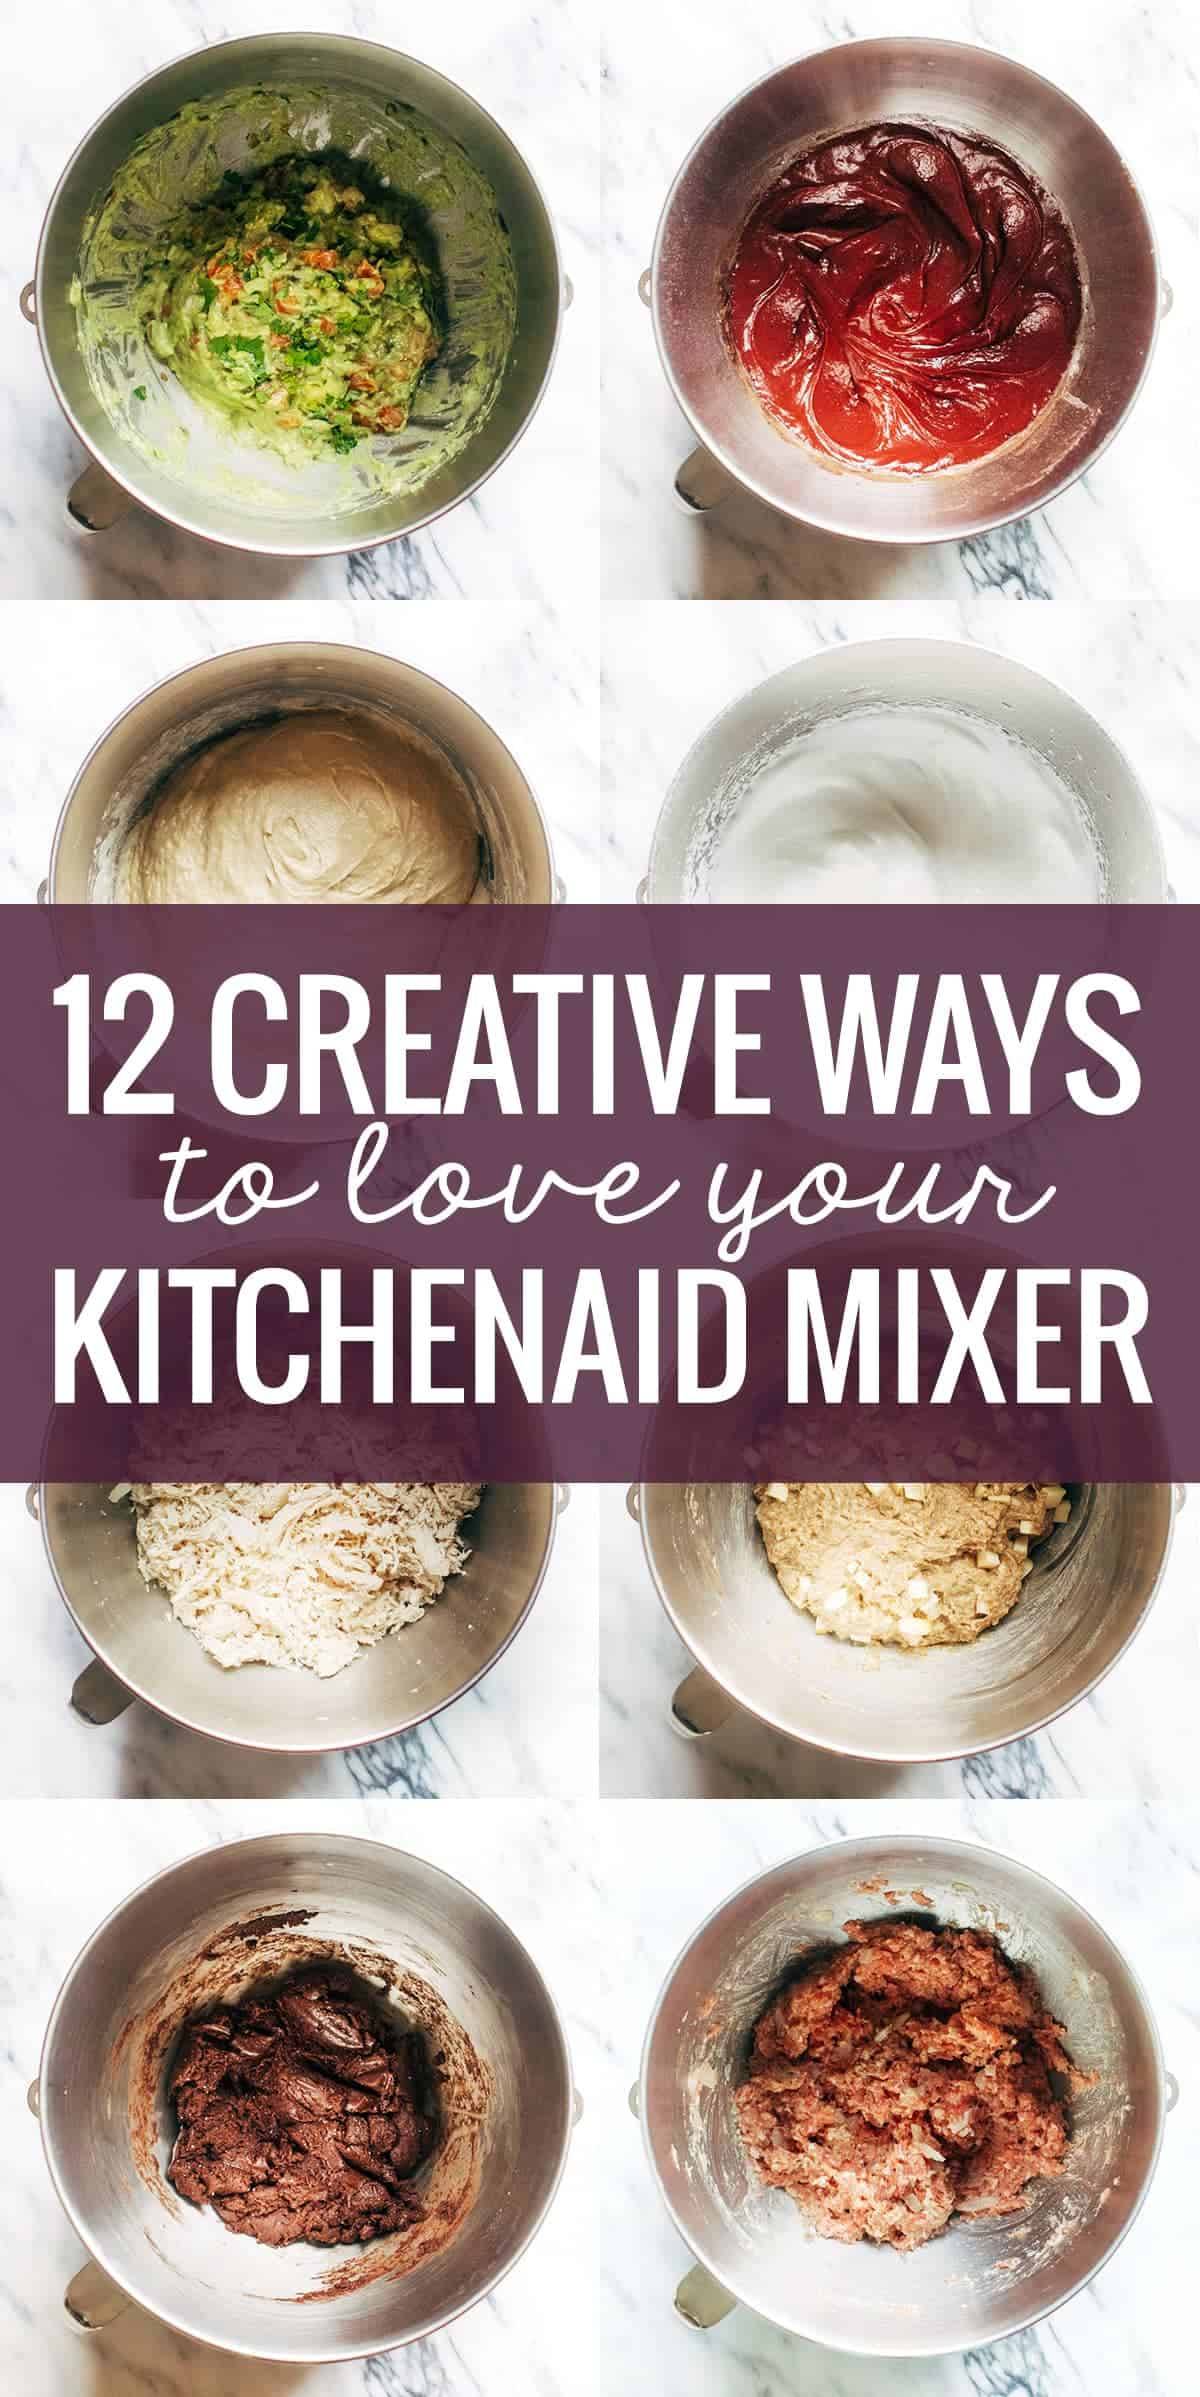 12 Creative Ways to Use A KitchenAid Mixer